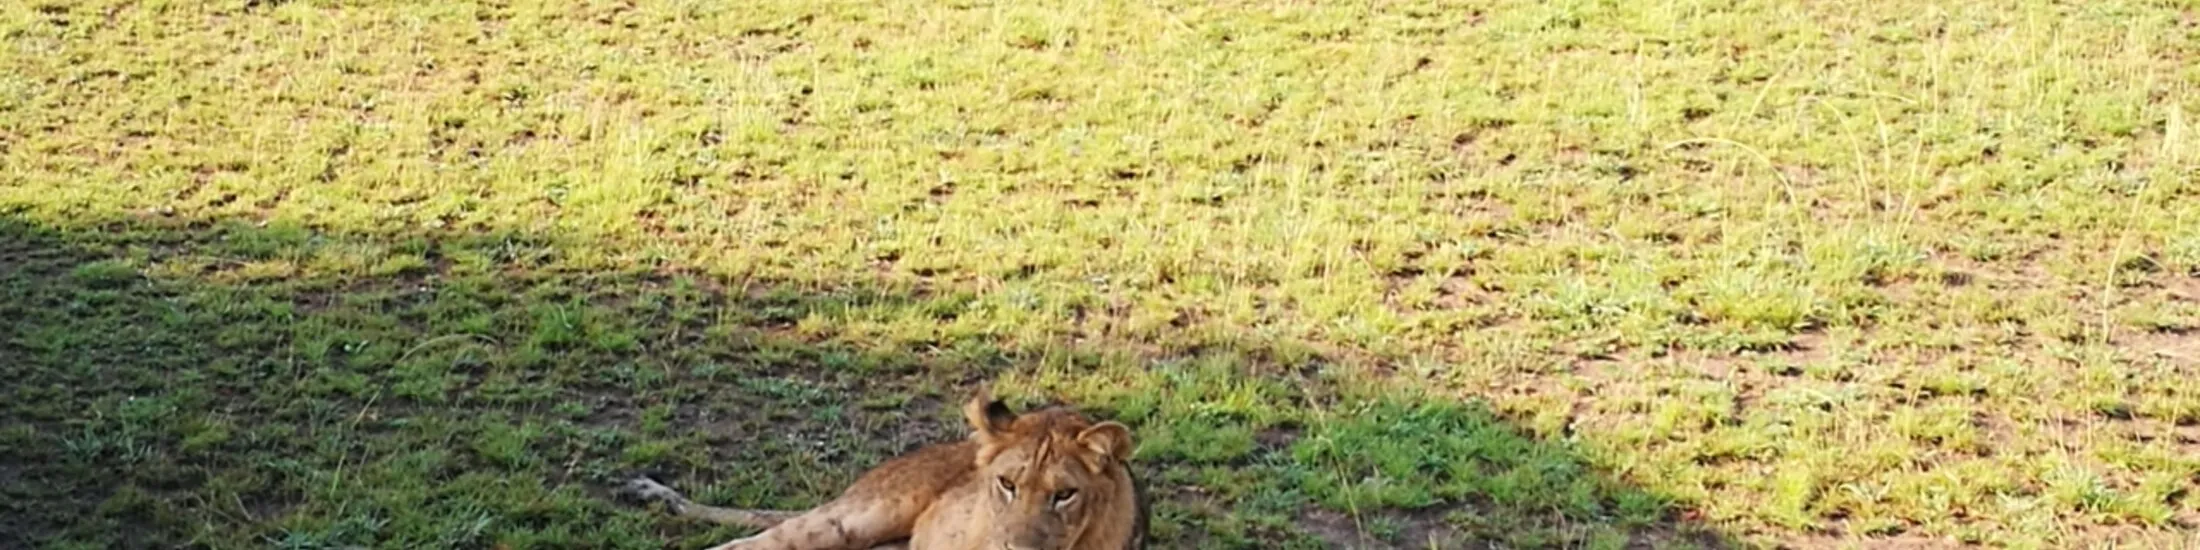 Lion Experience Uganda